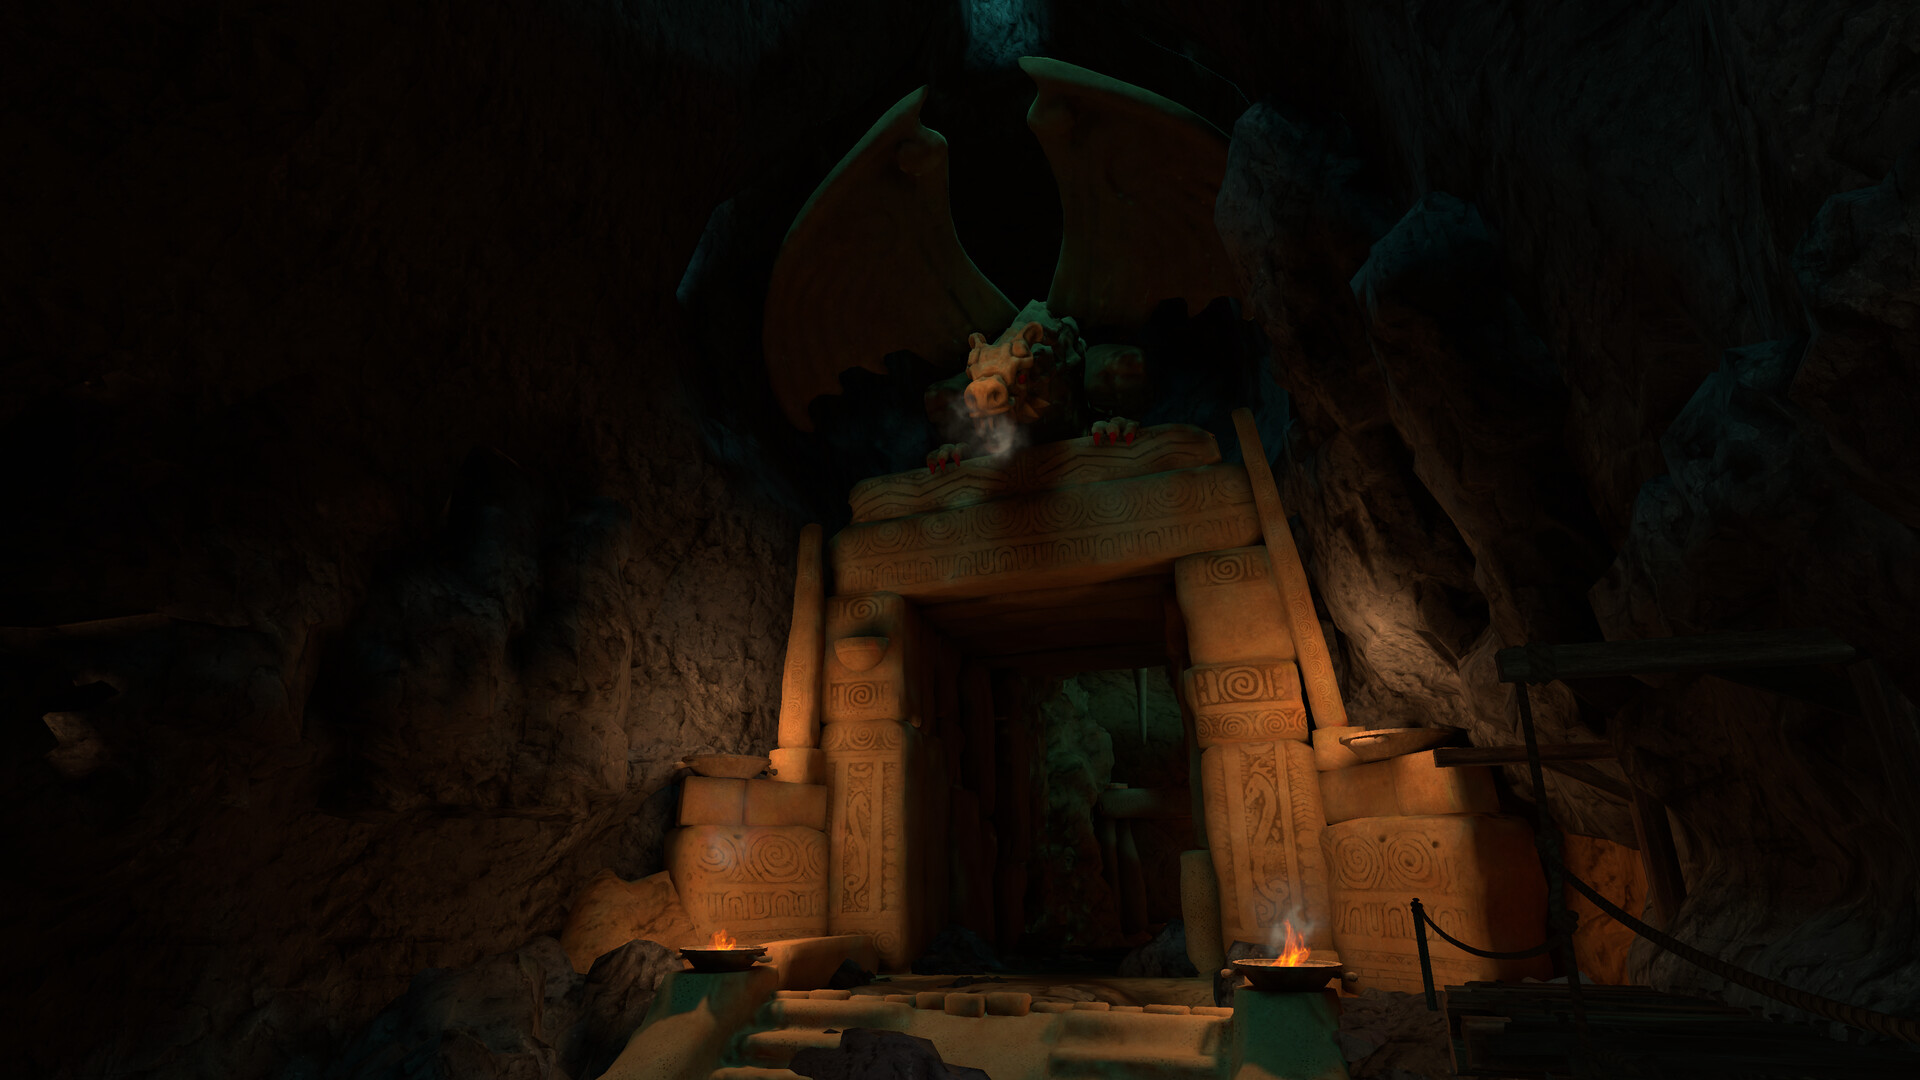 Oculus Quest 游戏《神秘的洞穴》Colossal Cave